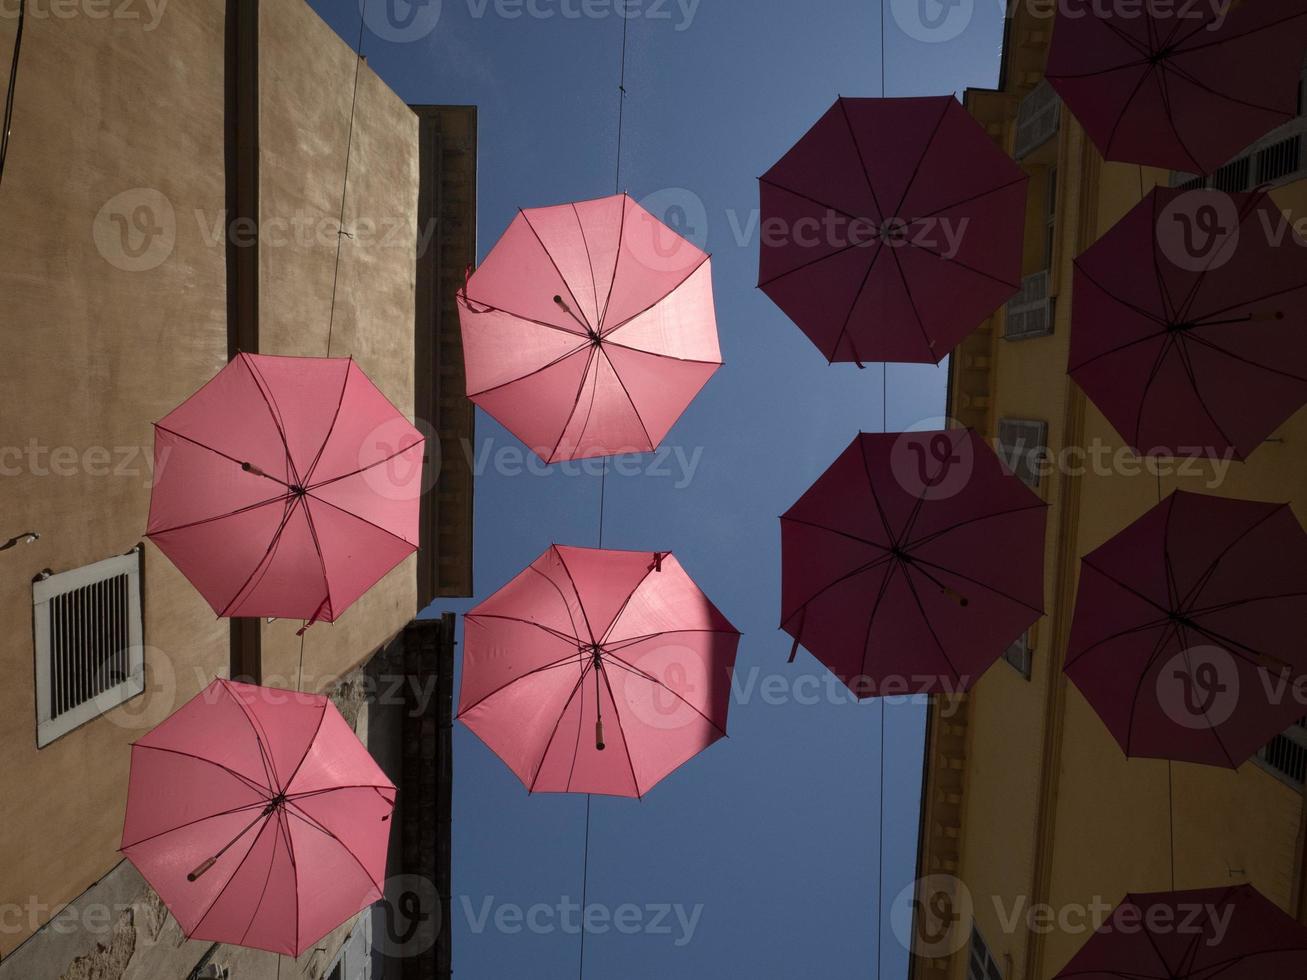 Grasse France pink umbrellas street photo